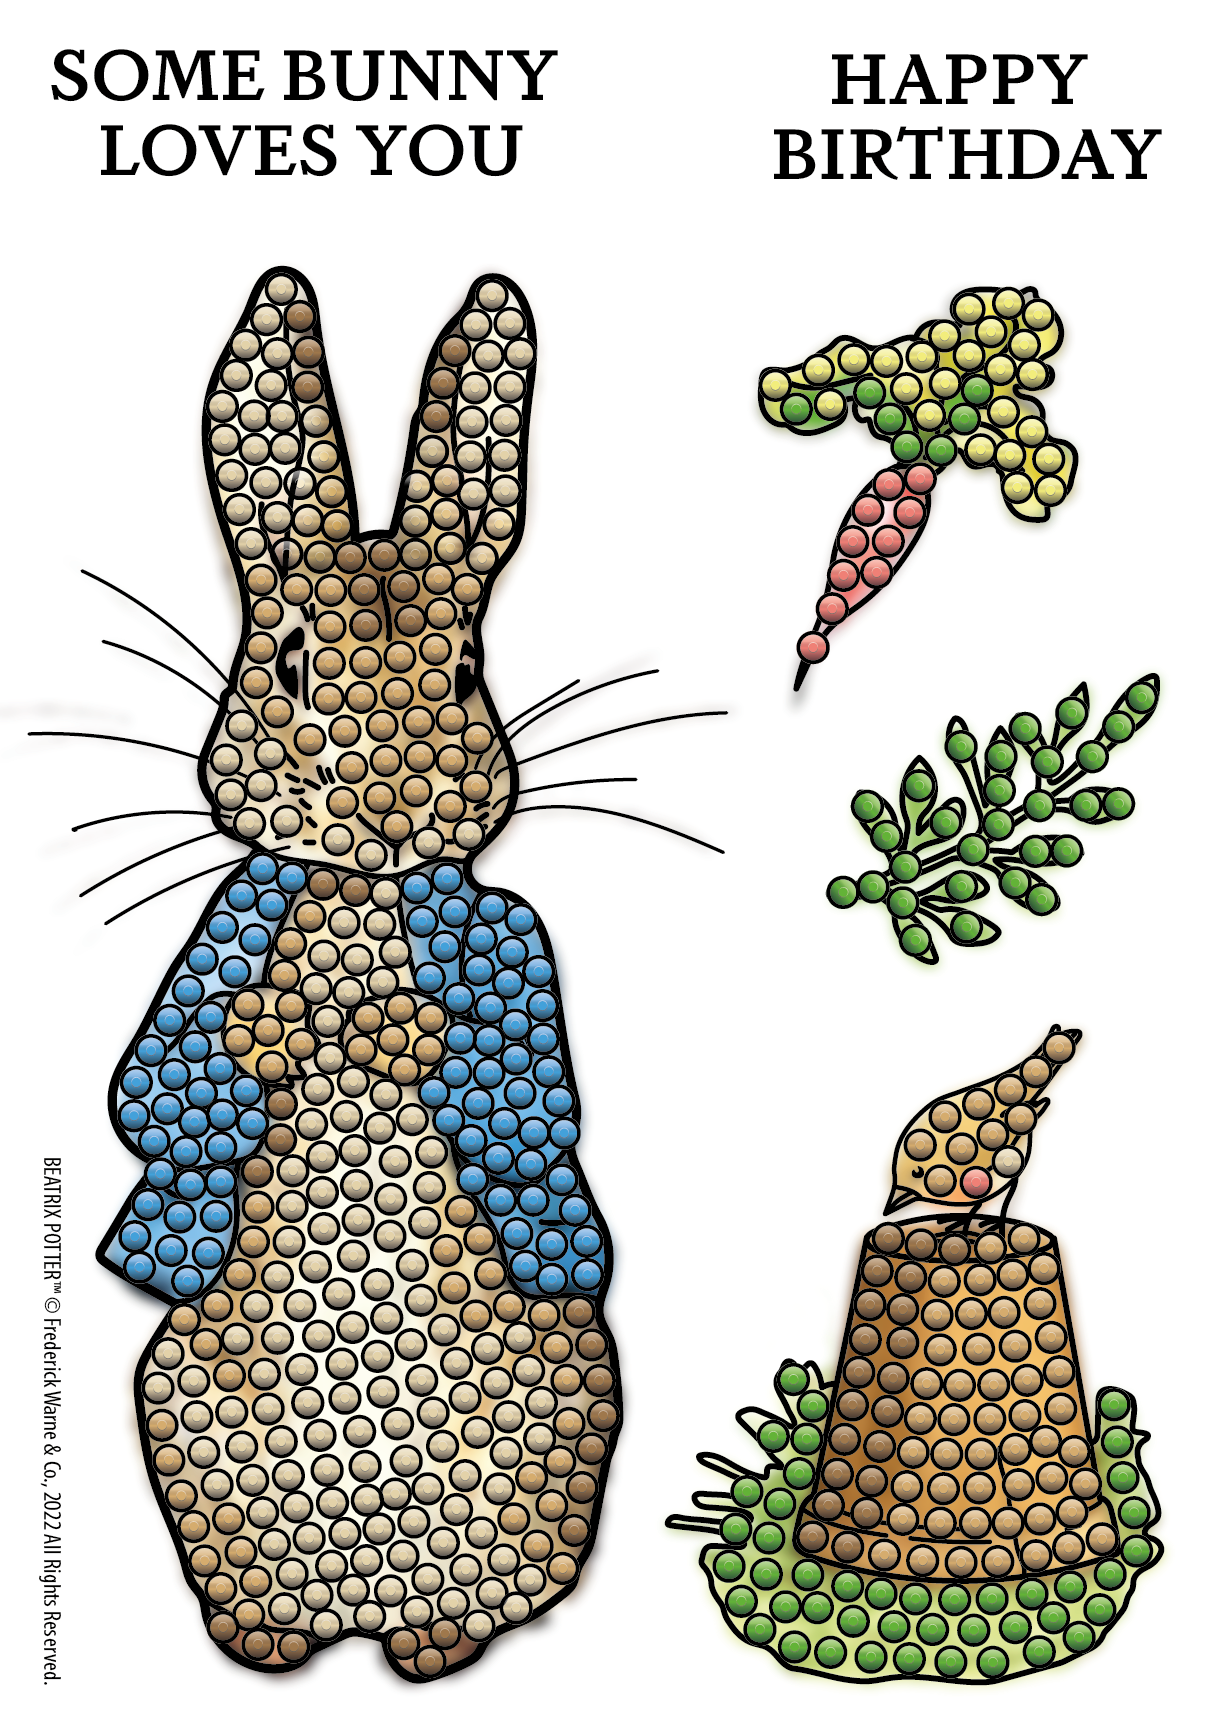 CCST-PR03: Peter Rabbit Crystal Art A6 Stamp Set - Peter Rabbit